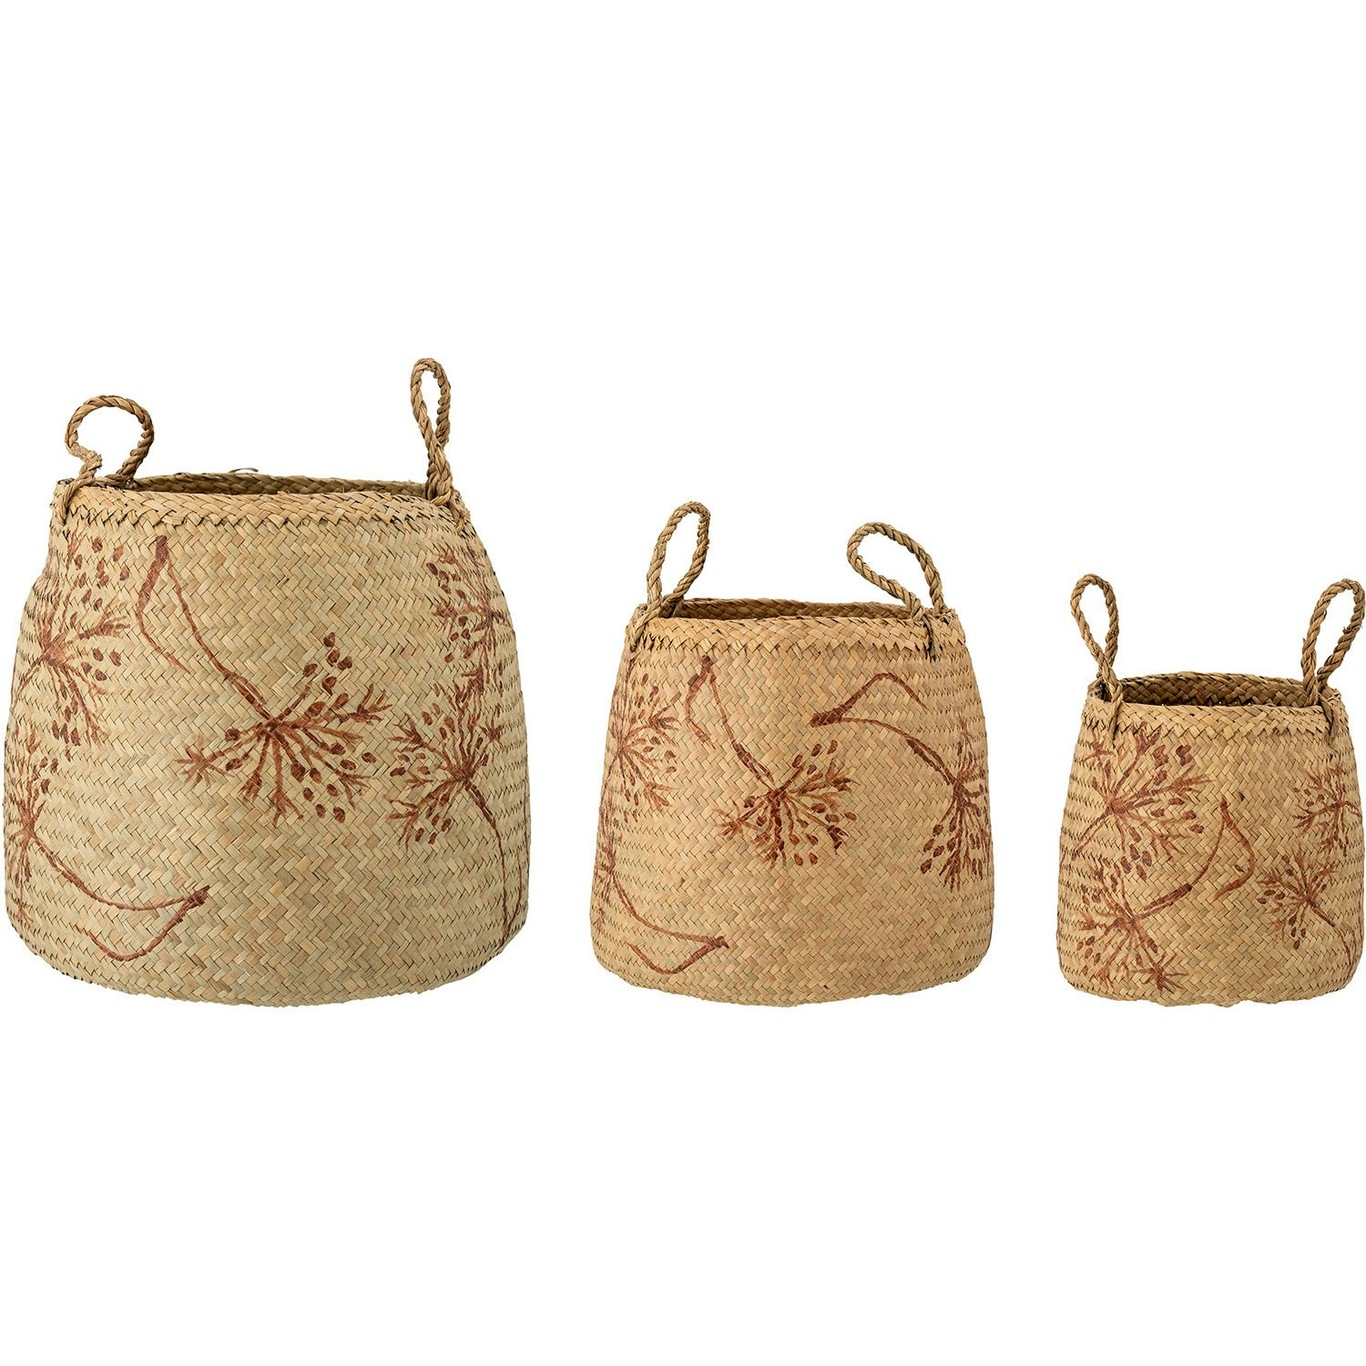 Molli Baskets 3 Pieces, Seagrass